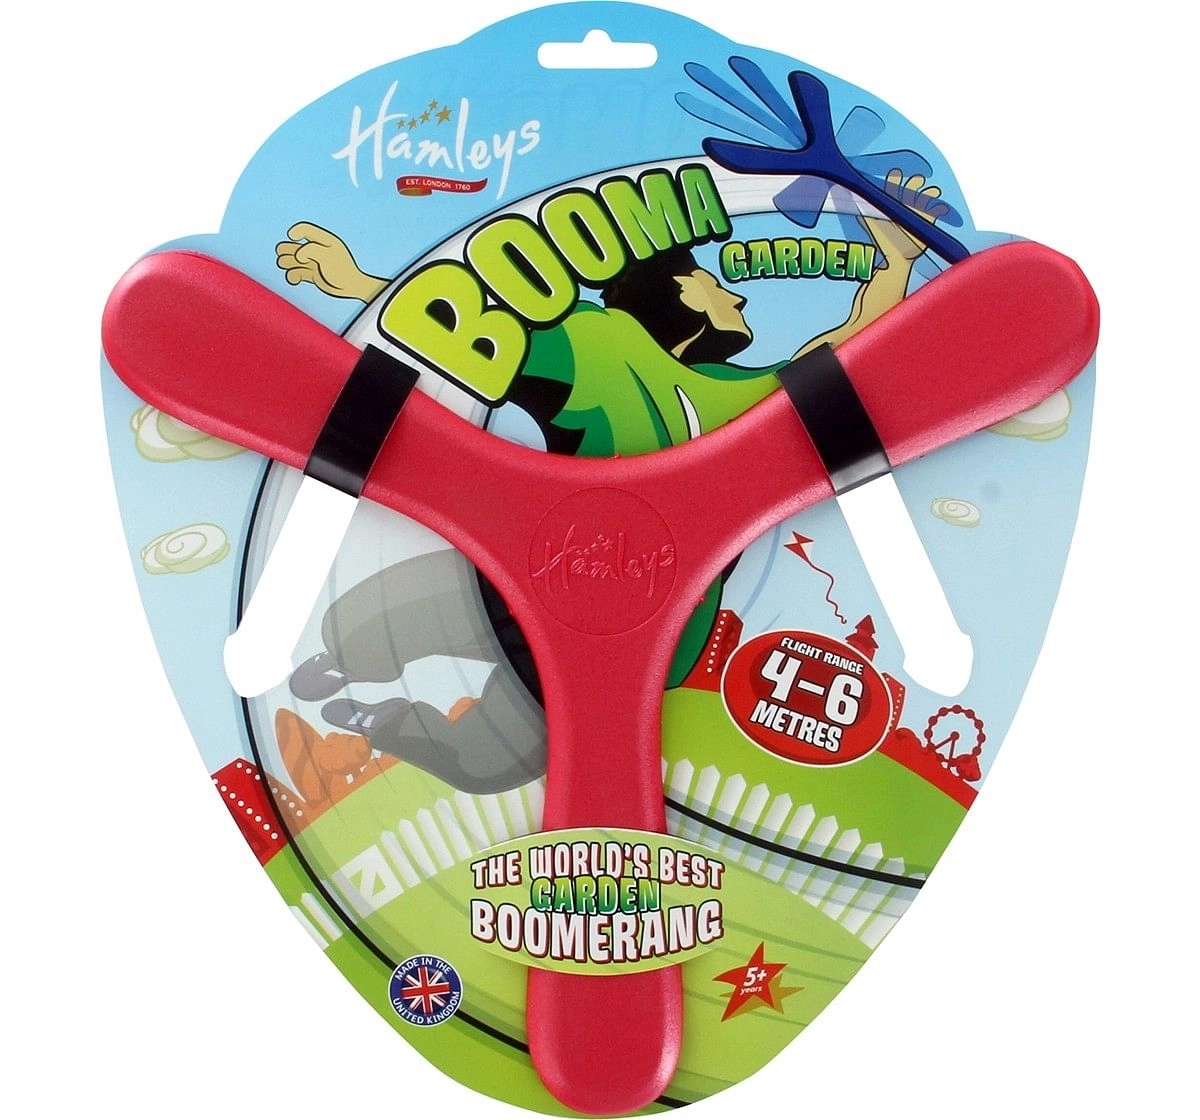 Wicked Hamleys Indoor Boomerang  Impulse Toys for Kids age 5Y+ (Color May Very)